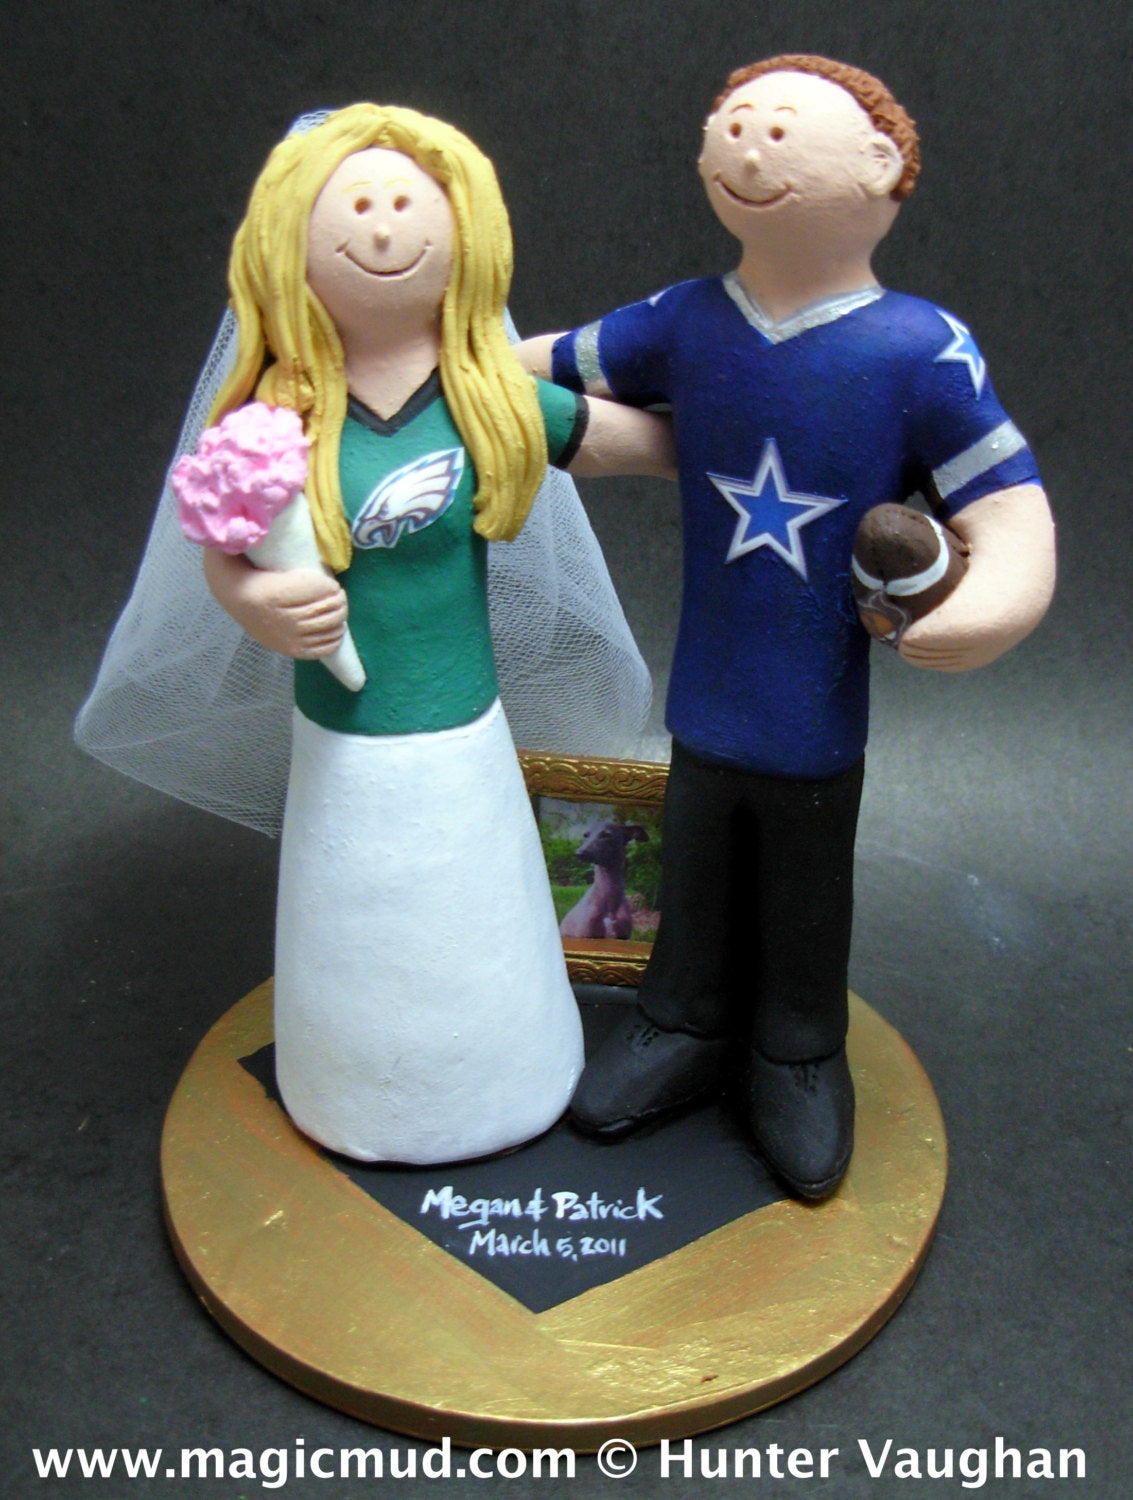 Philadelphia Eagles Bride Wedding Cake Topper, Dallas Cowboys Groom Wedding Cake Topper, Football Team Bride and Groom Wedding Cake Topper - iWeddingCakeToppers